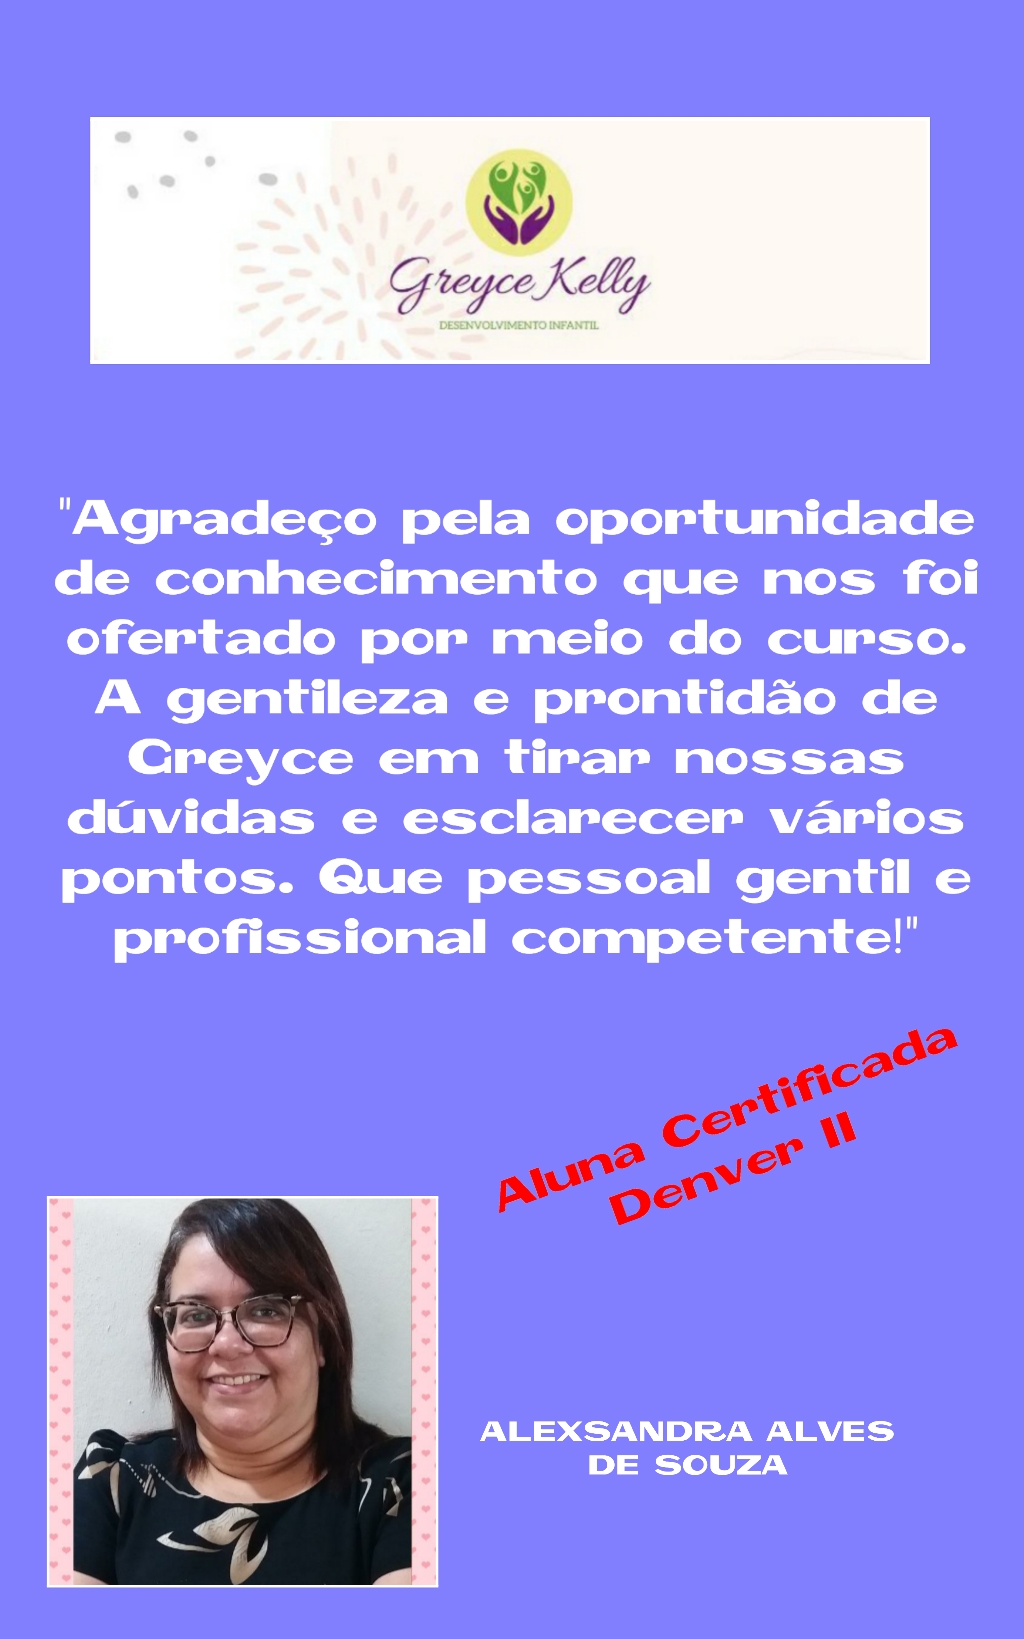 Alexandra Alves de Souza